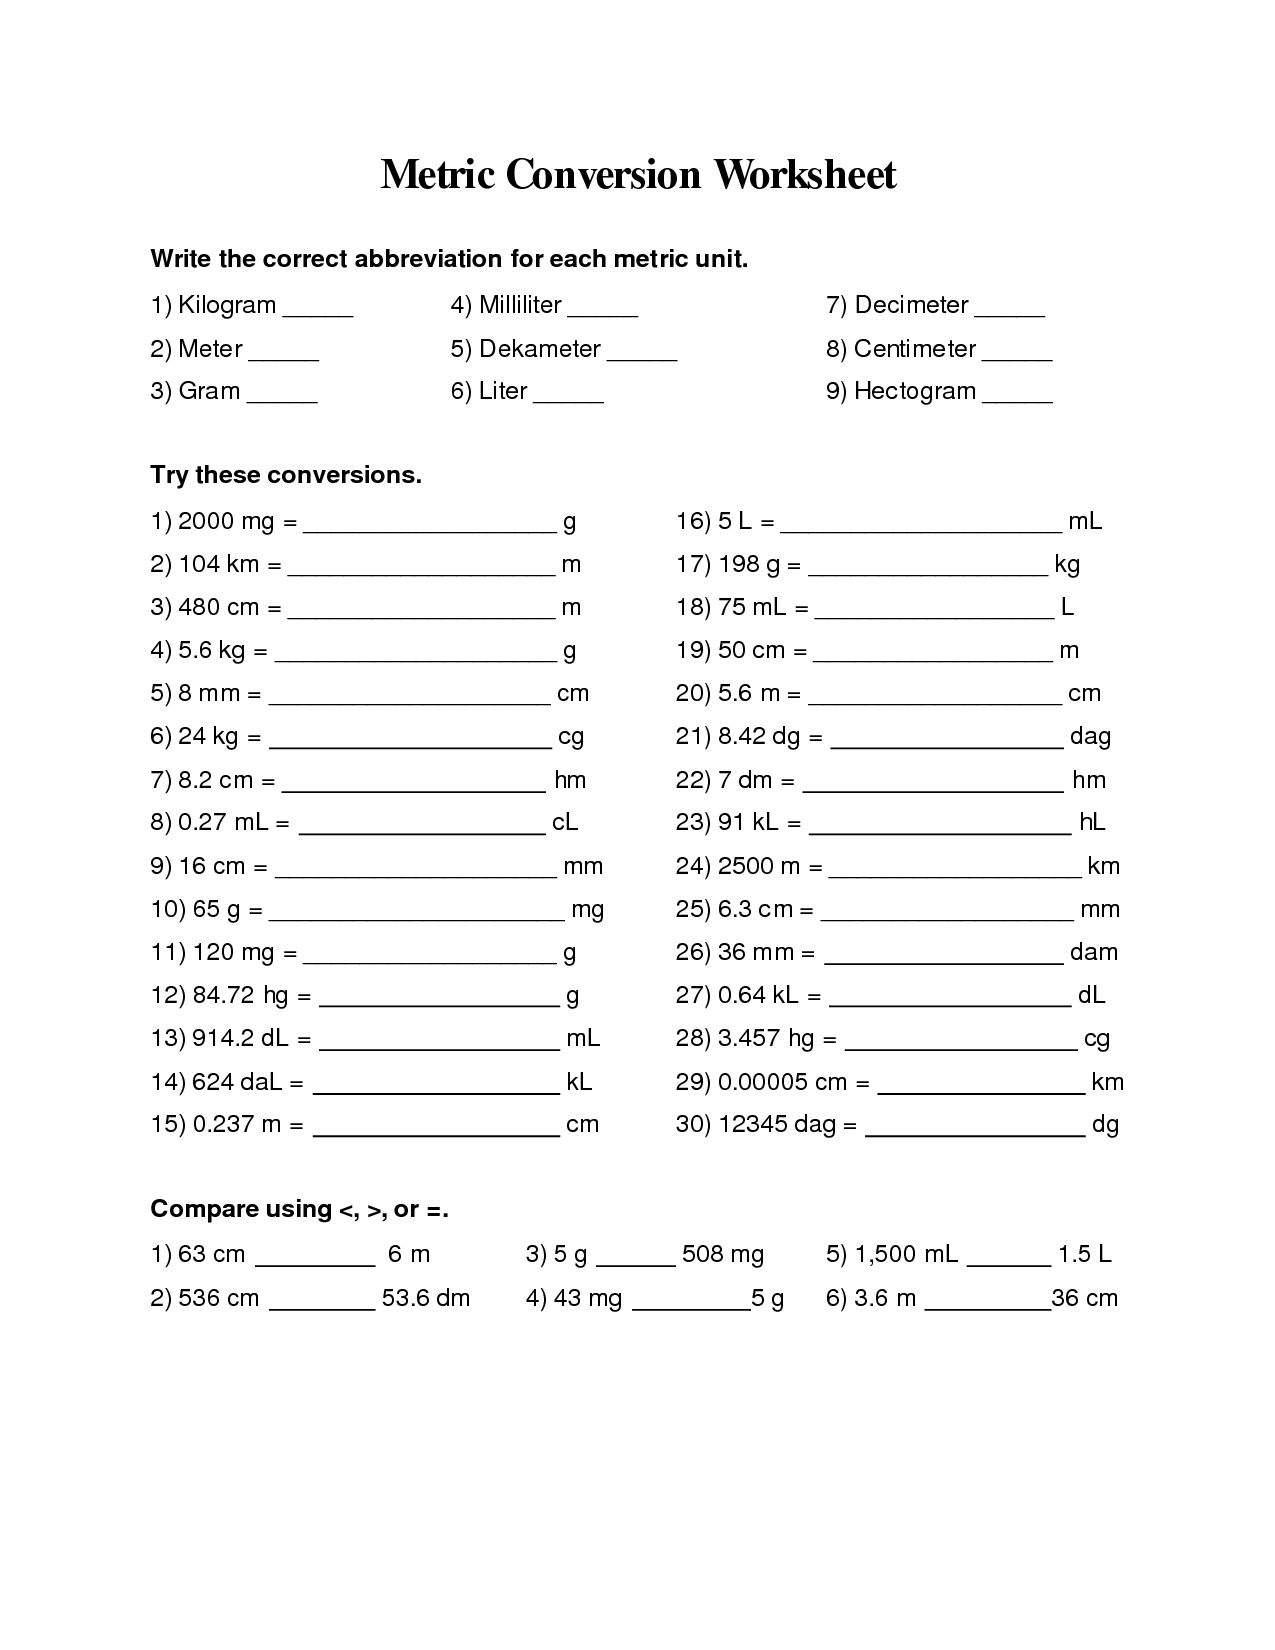 Converting Between Metric Units Worksheet Answers Math Aids Com